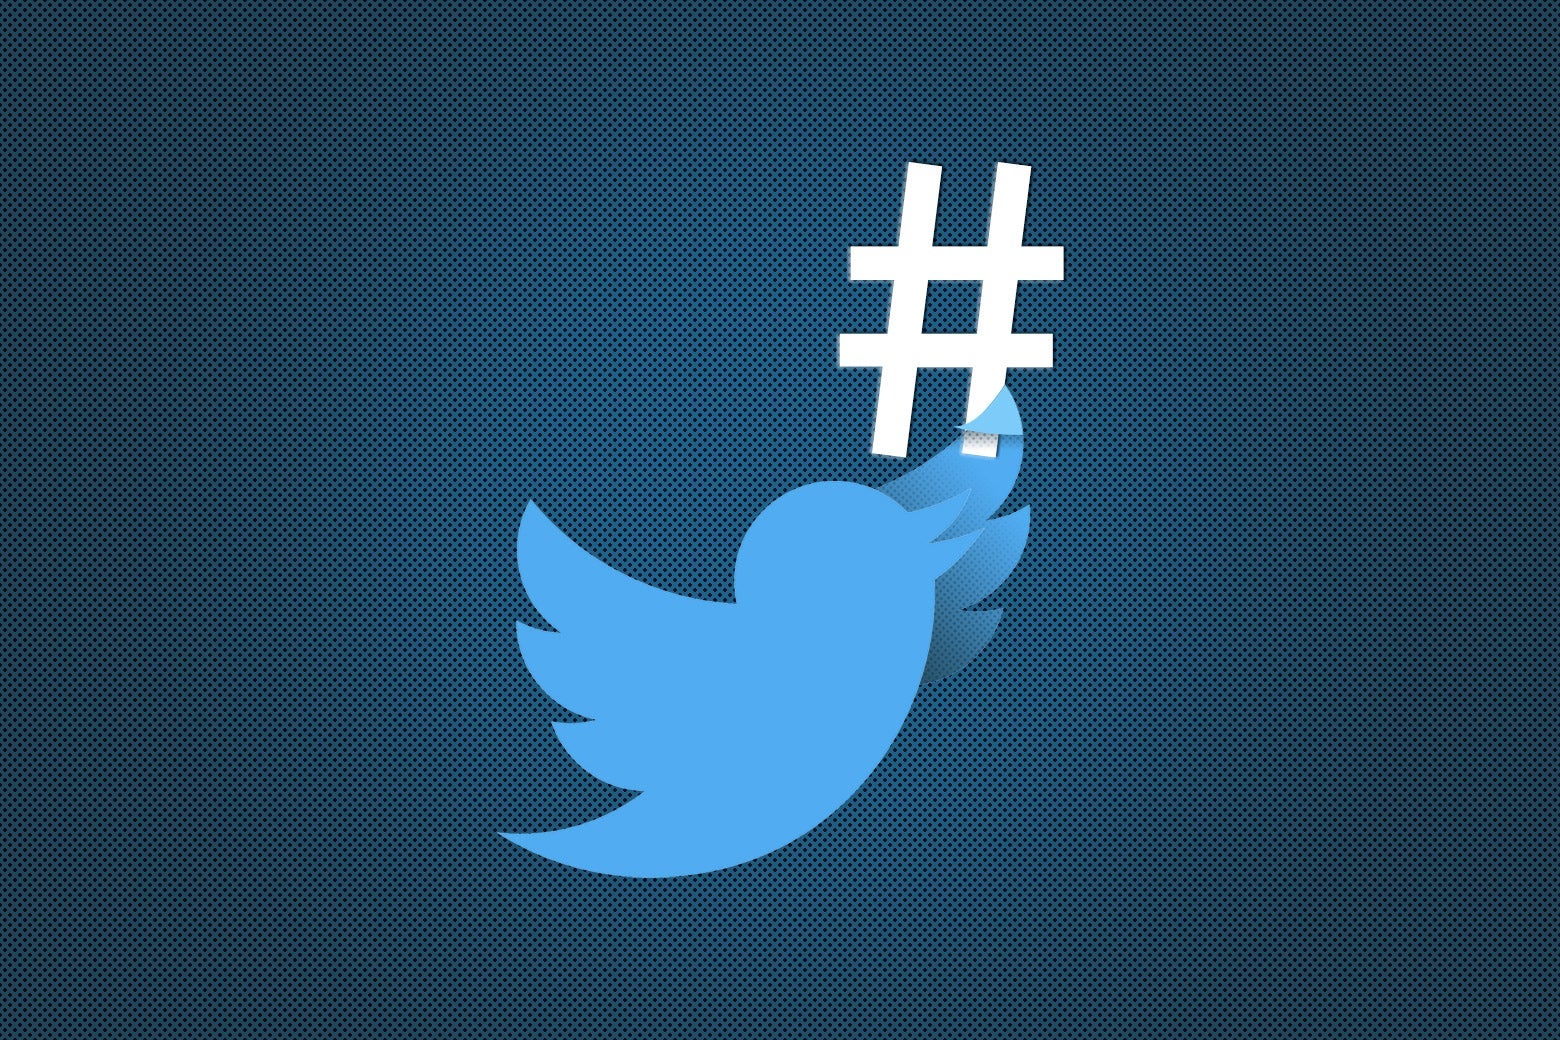 A Twitter bird is seen flying near a hashtag symbol.